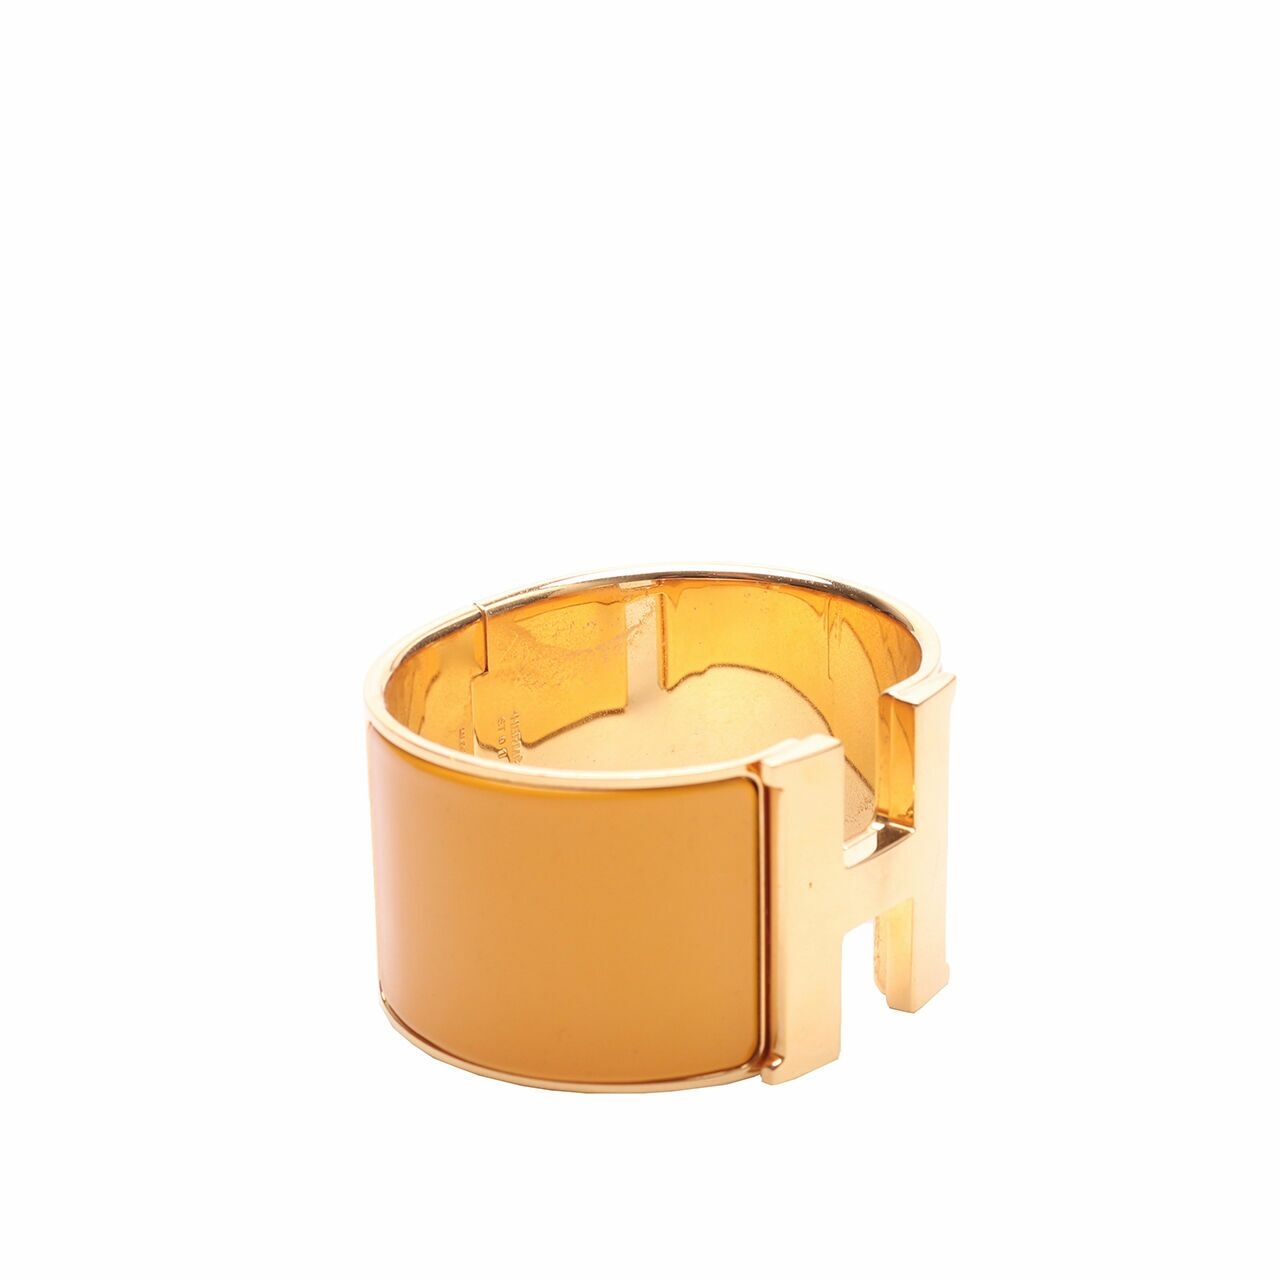 Hermes Clic Clac H Orange Enamel Gold Plated Wide Bracelet